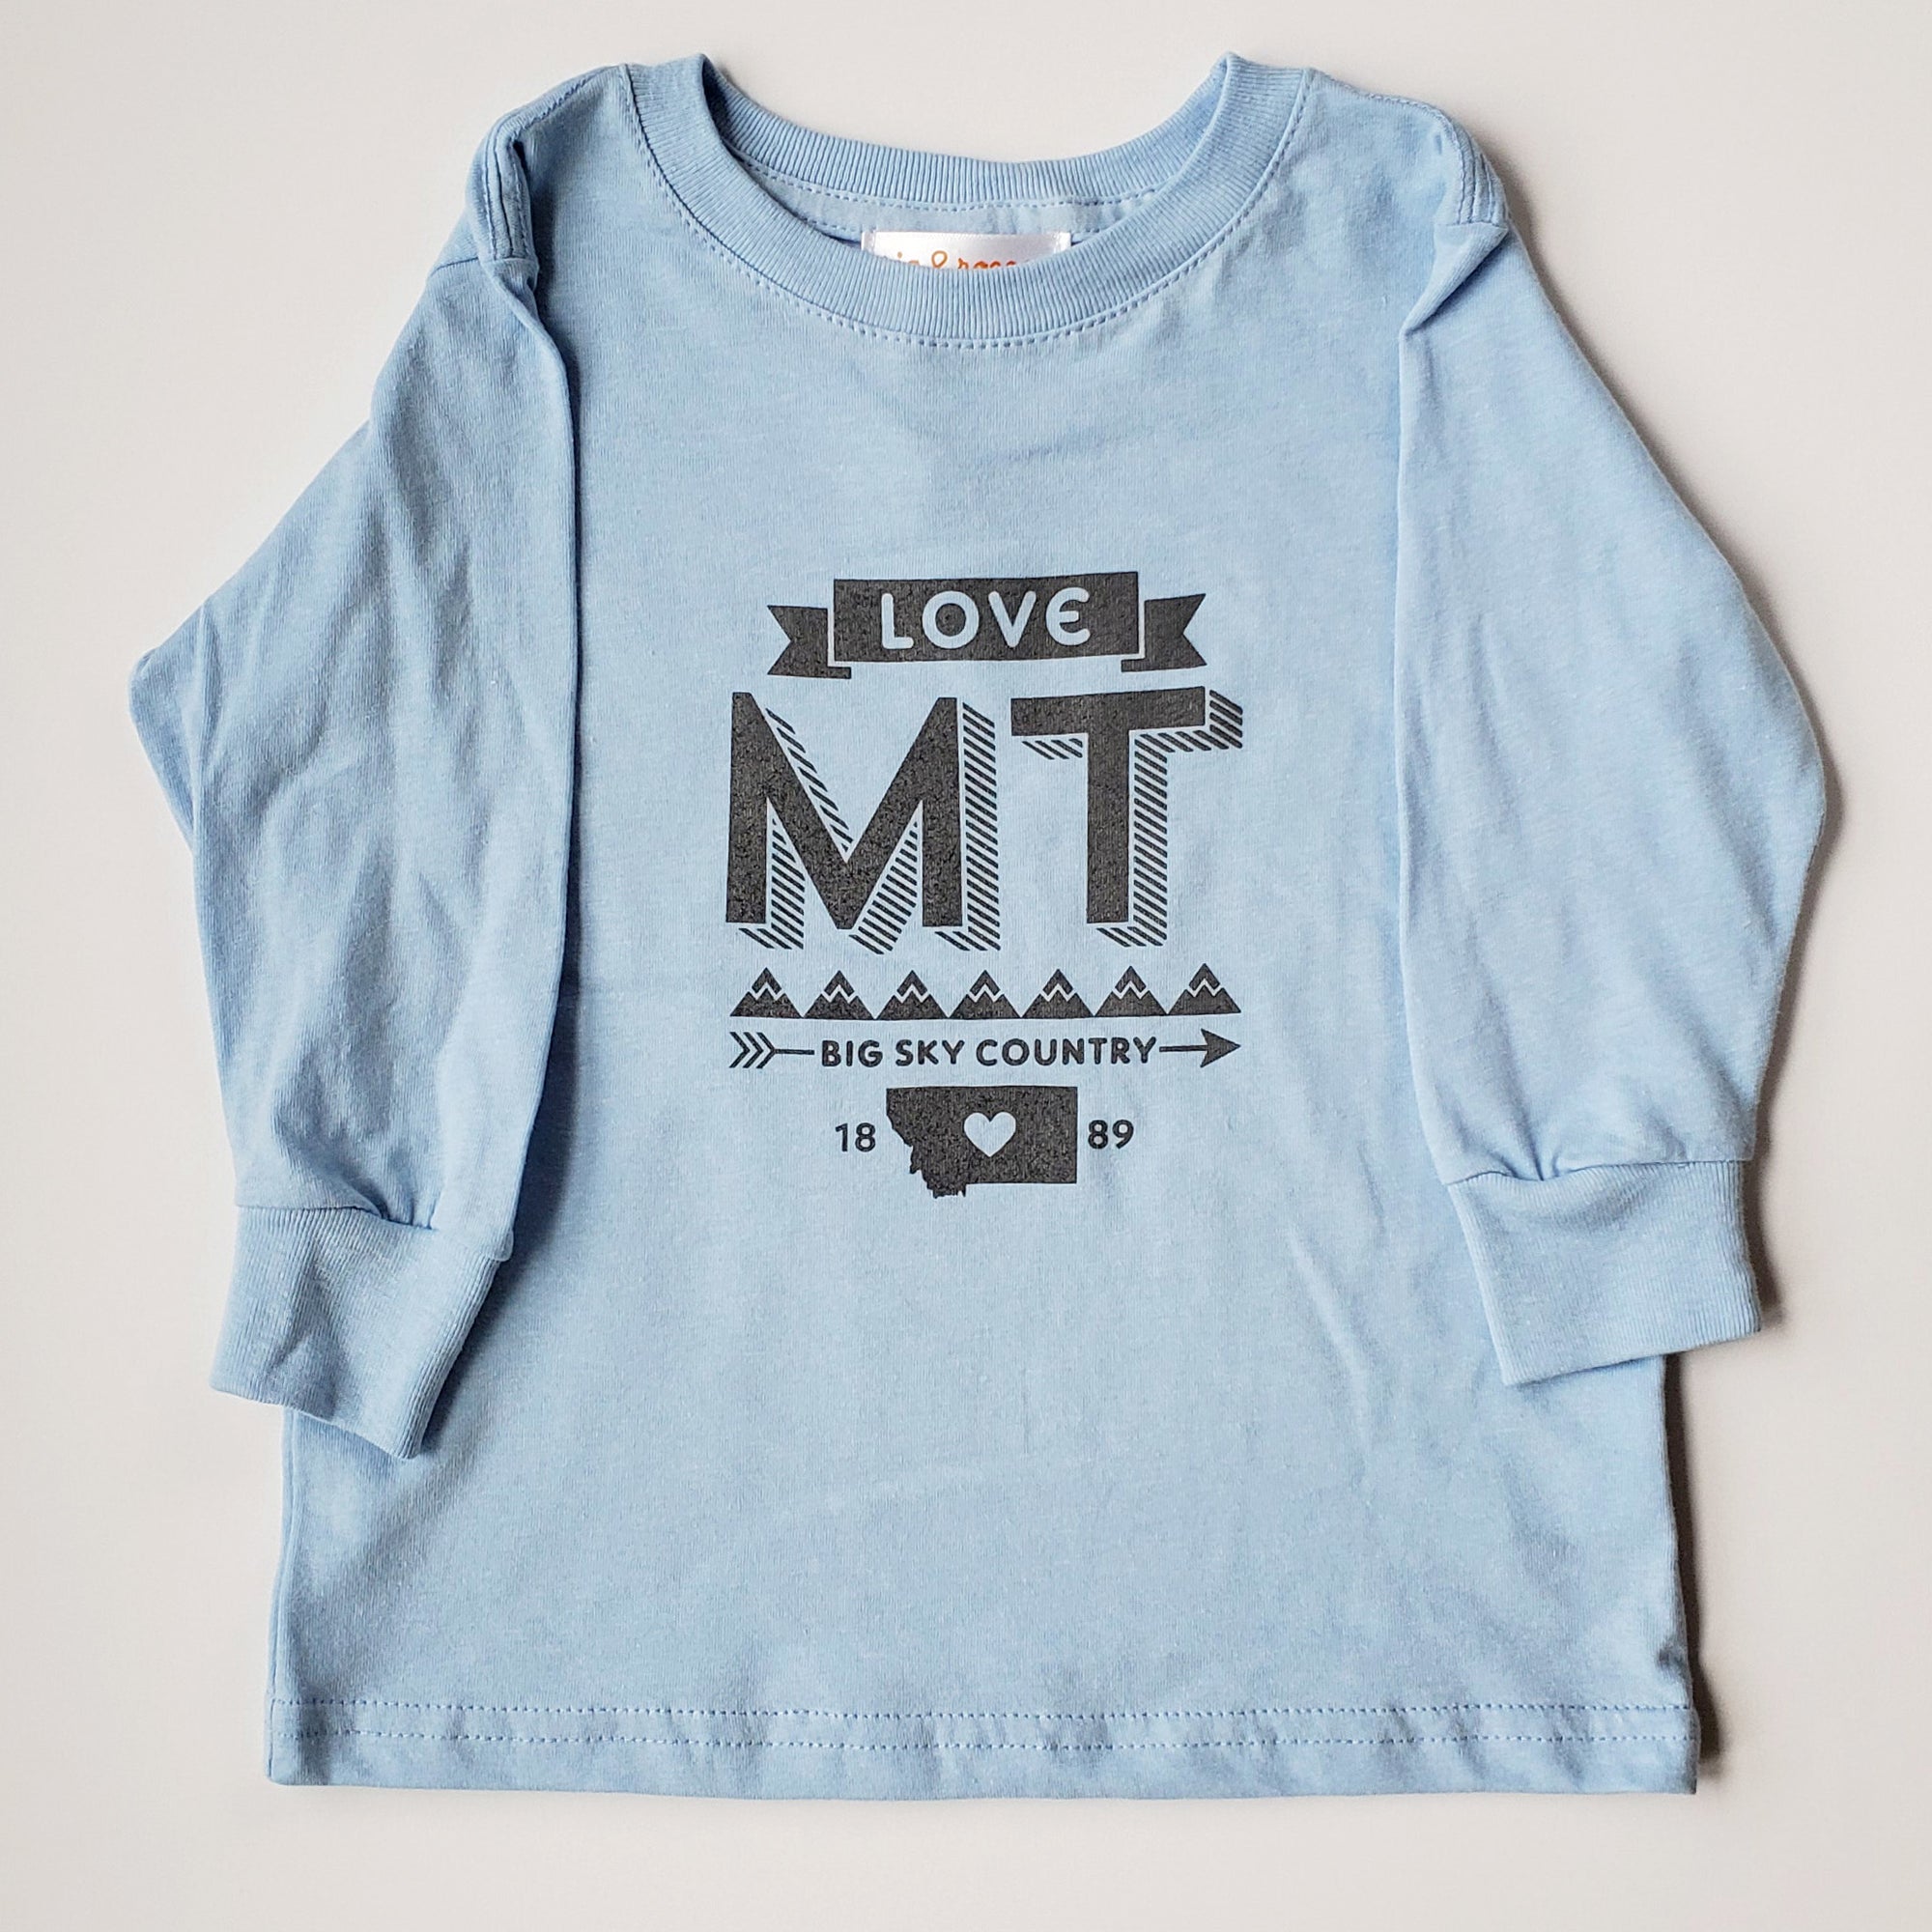 Hand Screen Printed Love Long & ria rocco Blue Montana Sleeve - Kids T-Shirts